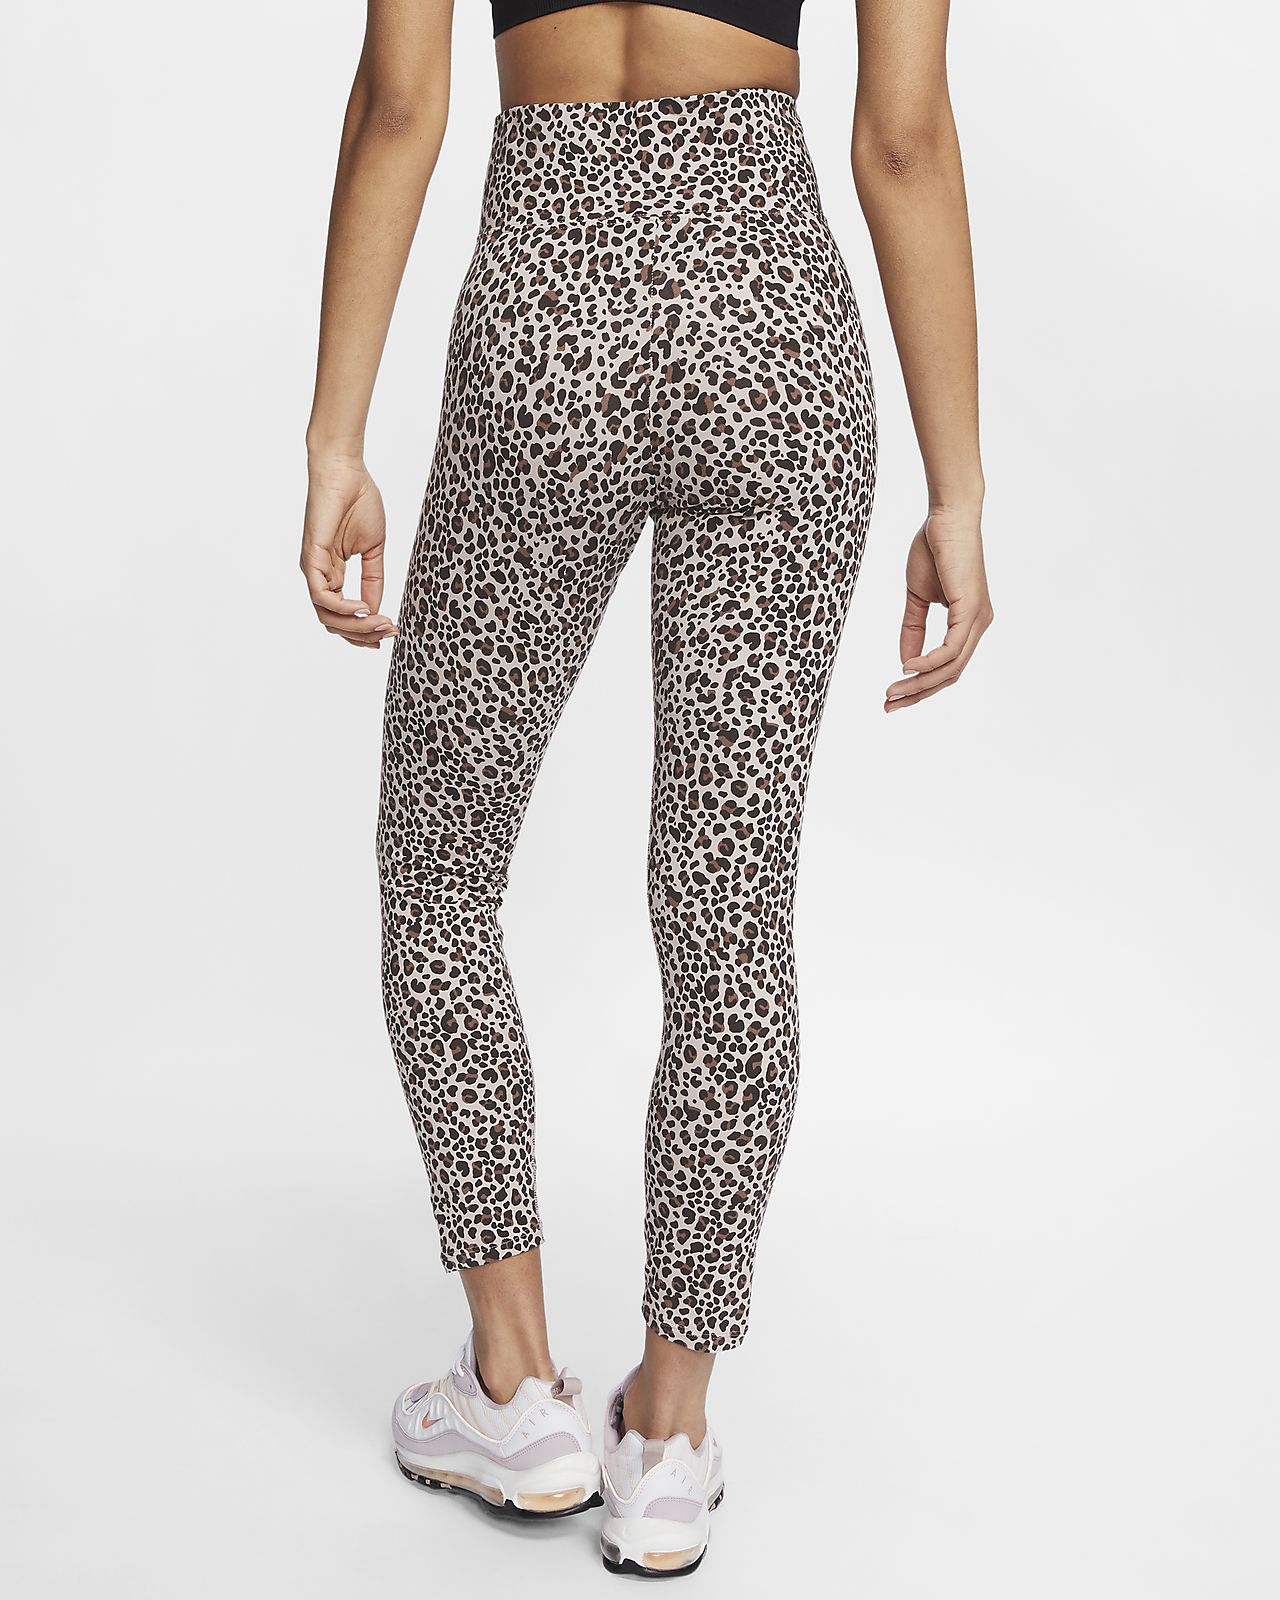 nike pink leopard print leggings